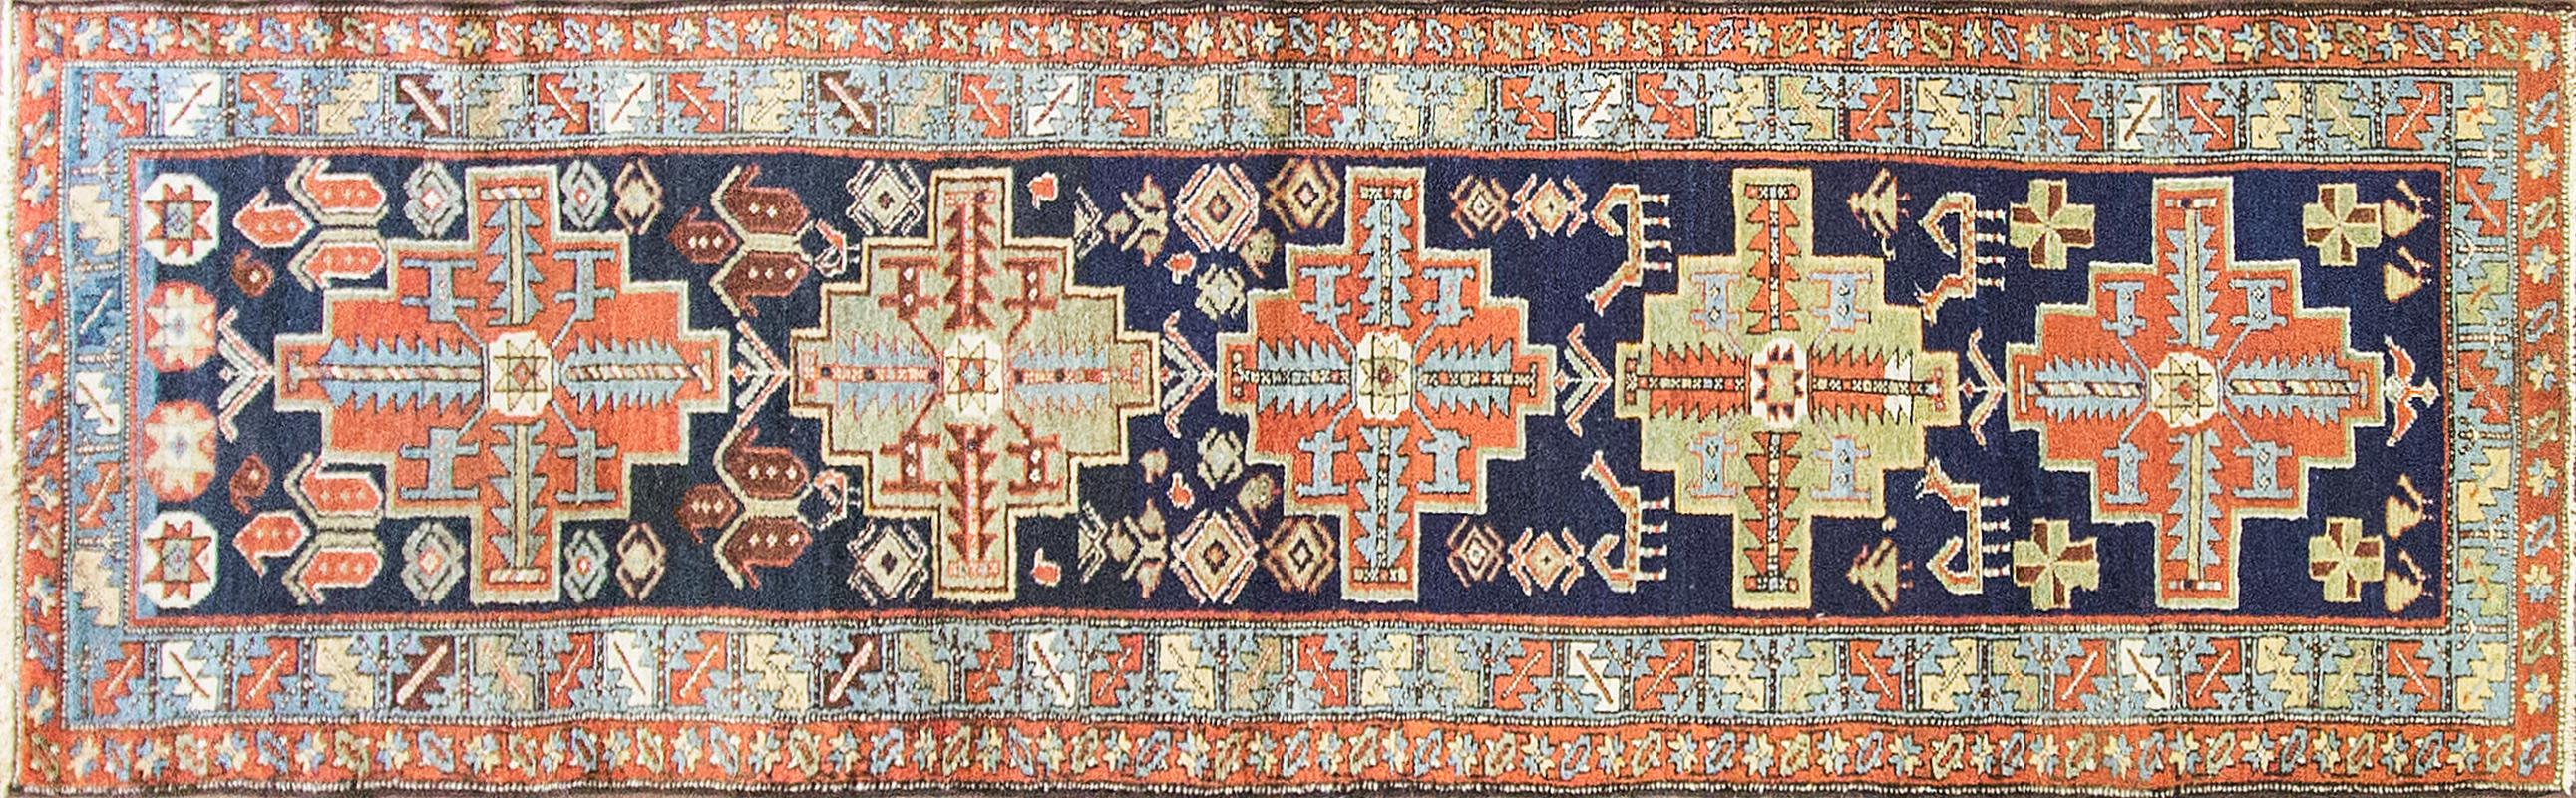 Natural-dyed wool Persian Karaja rug handmade in or near the village of Qaraajeh (Karaja), in the Qareh Daagh (Karadagh) region of Iran just south of the Azerbaijan border, northeast of Tabriz. Measures: 2'10